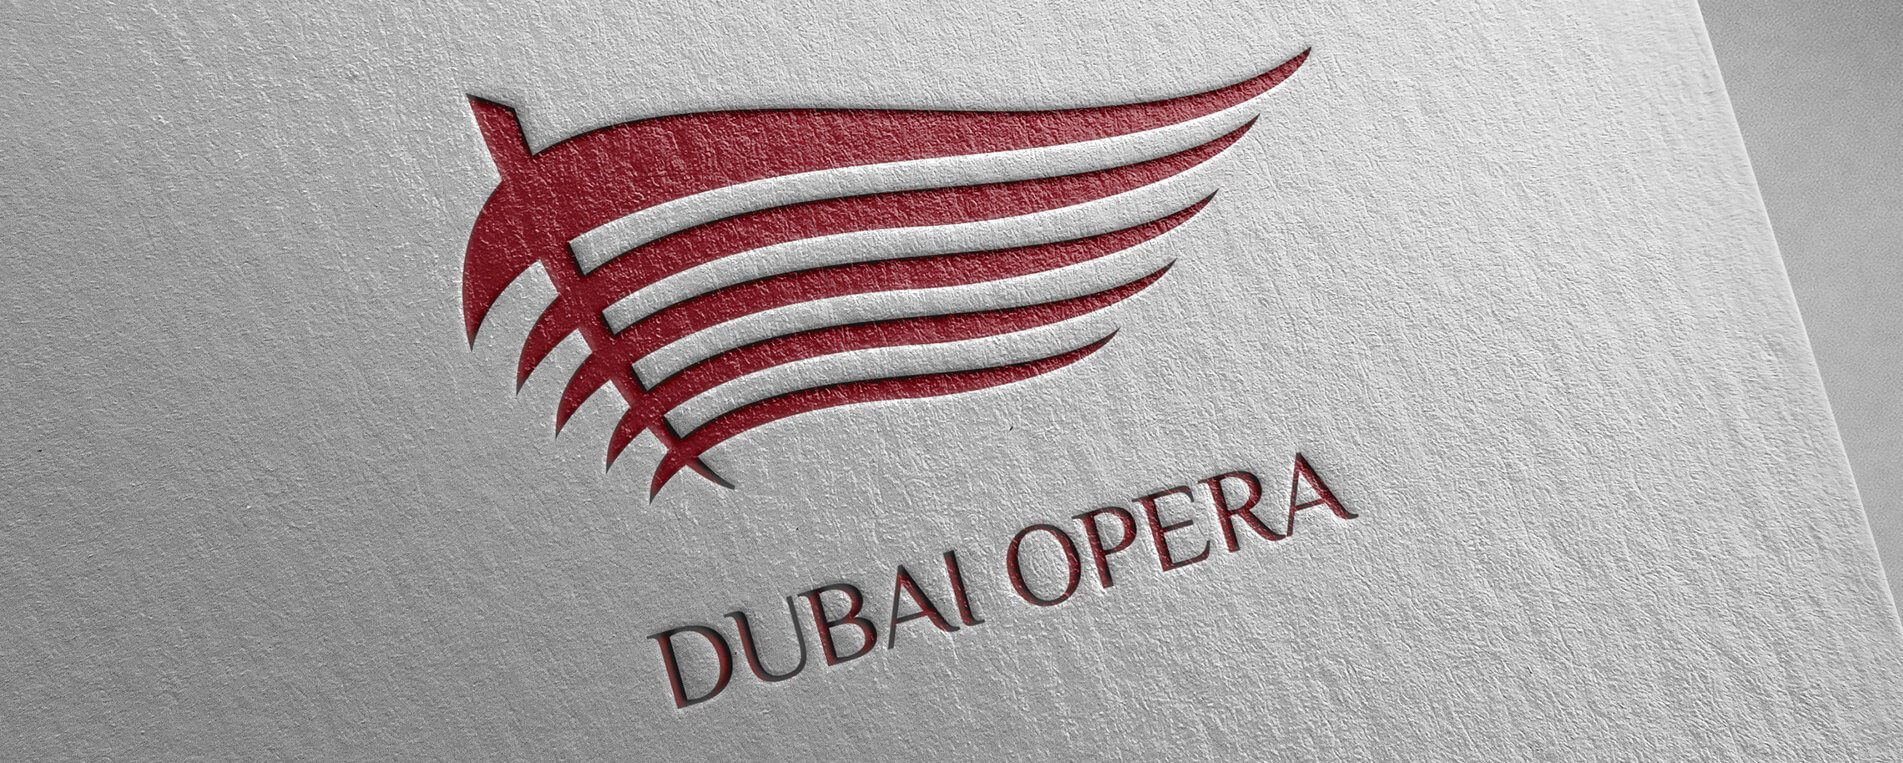 Dubai-Opera-Case-Study